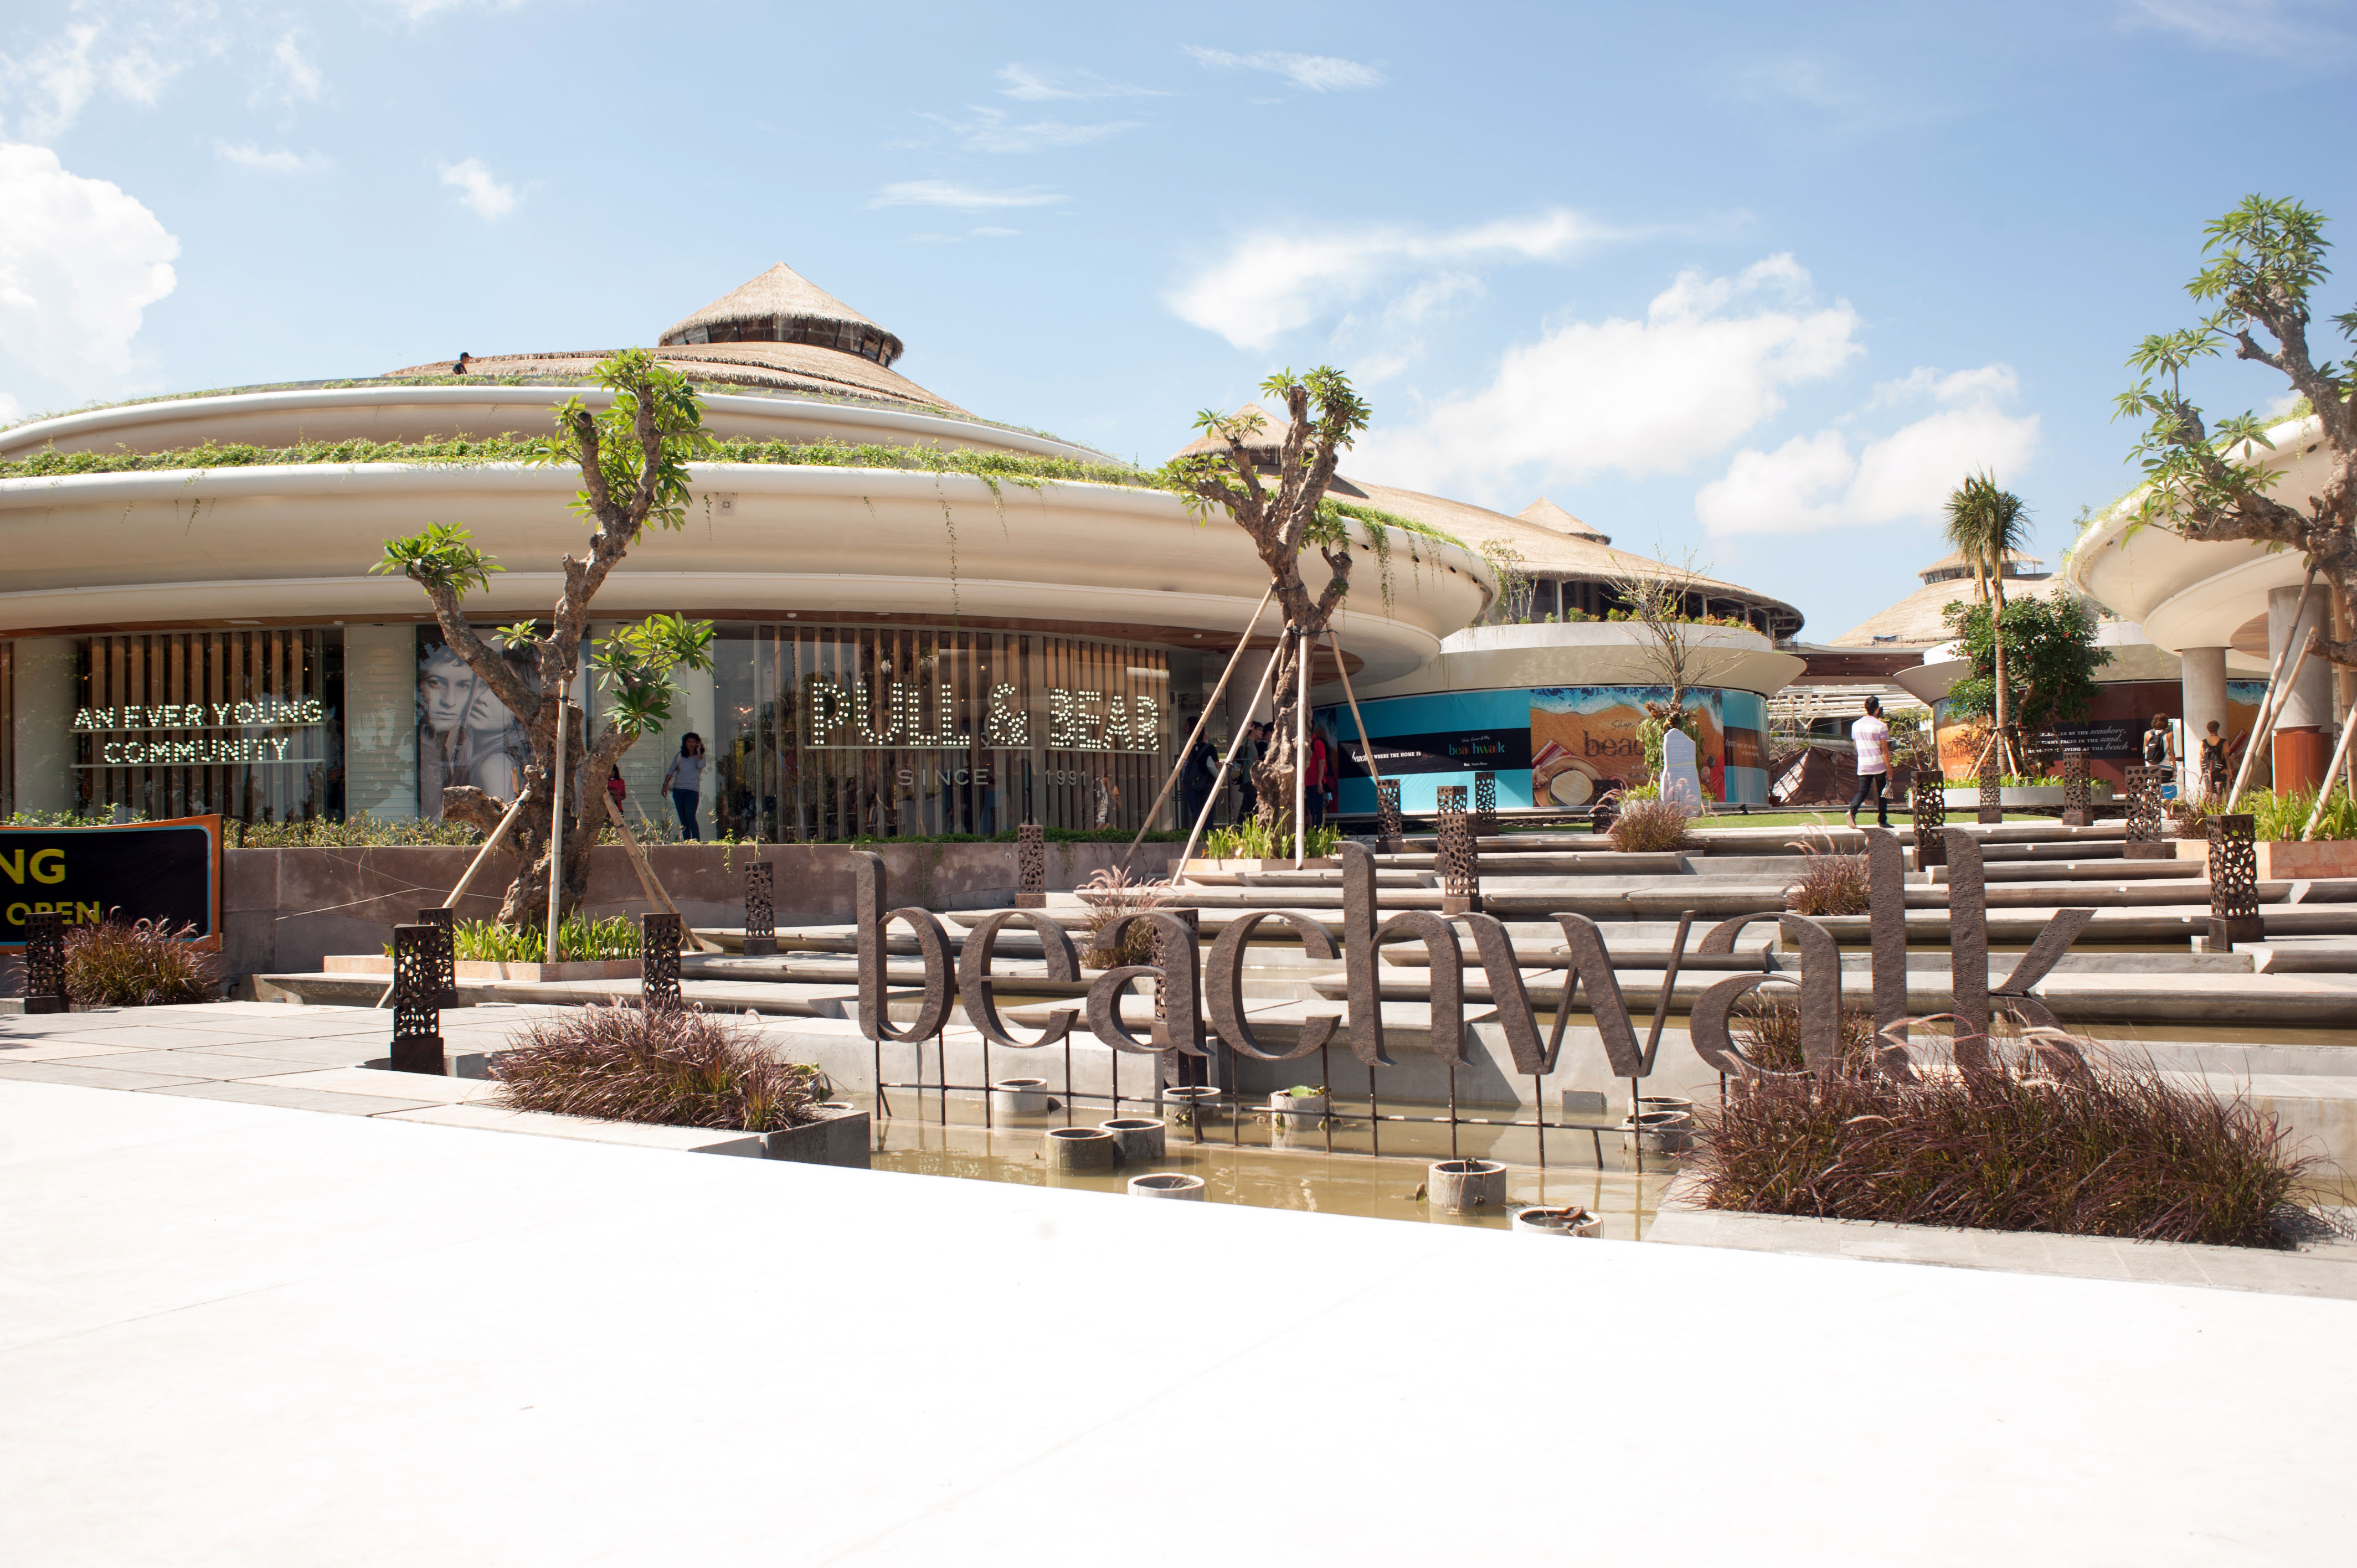 Beachwalk Mall in Bali, Complete Shopping Guide at Beachwalk Mall Bali